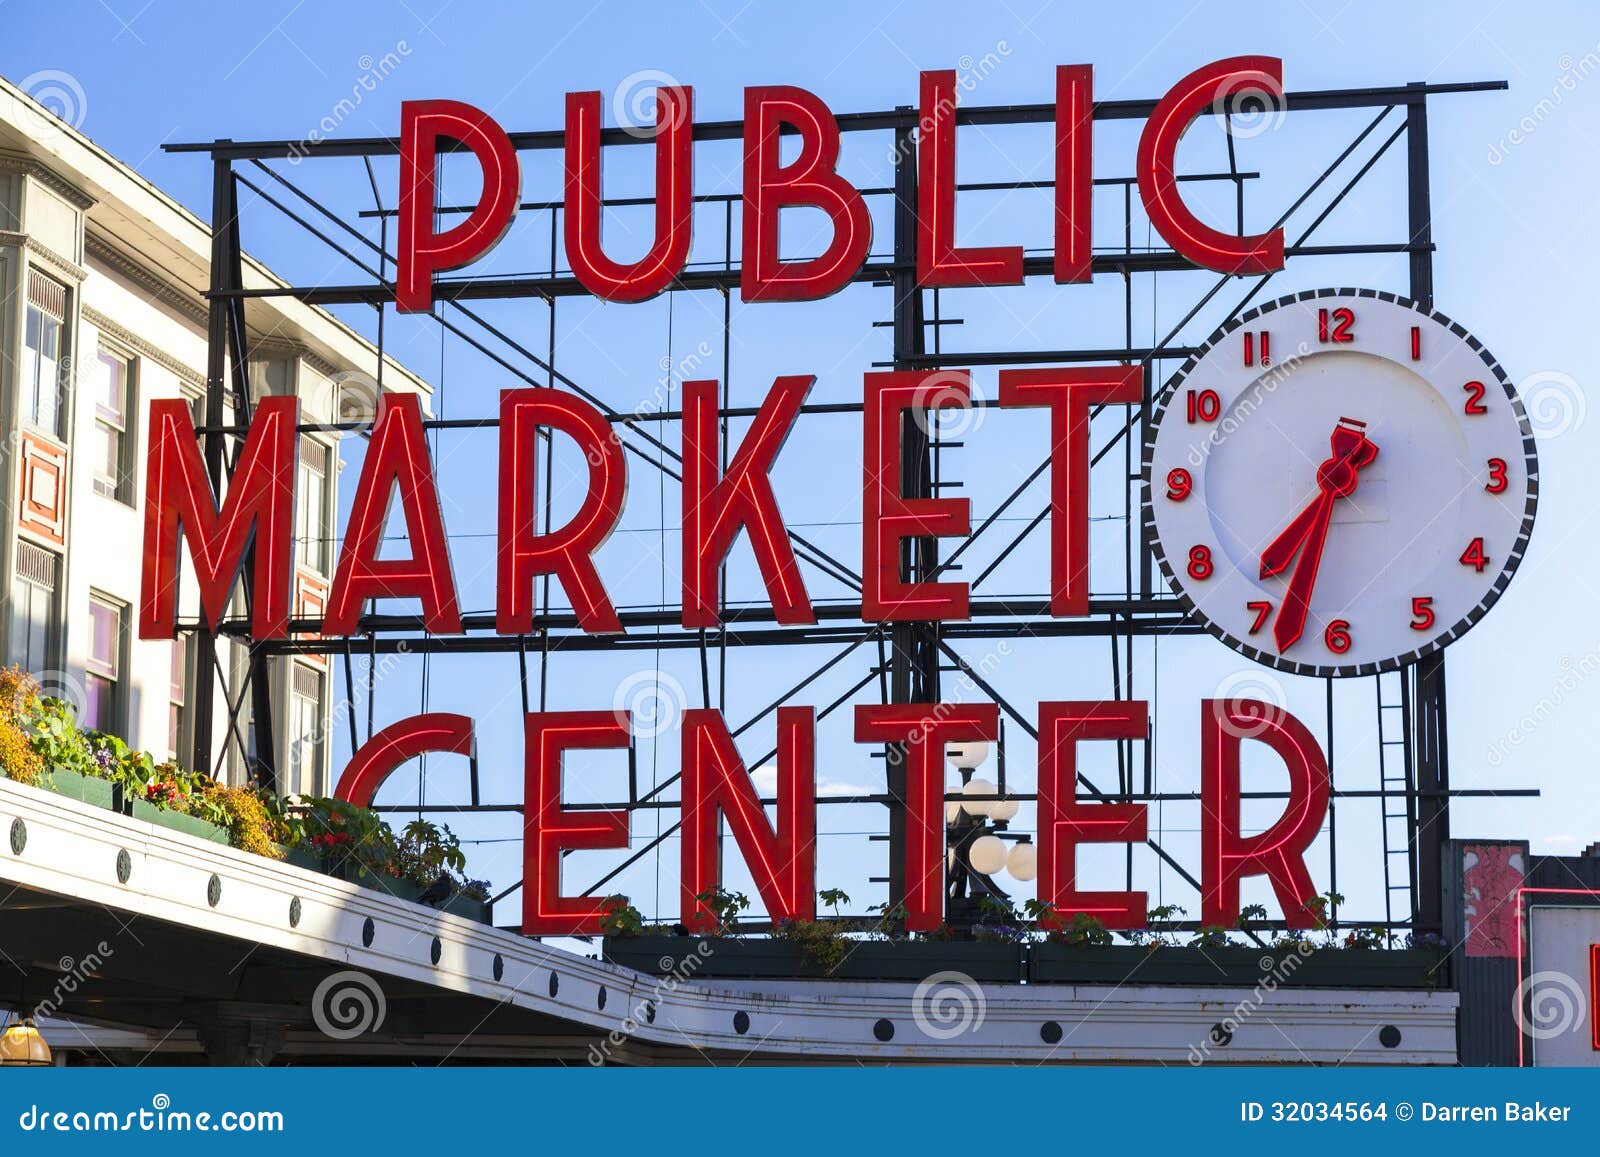 WA Seattle Details about   Original PHOTOGRAPH at Pikes Market PUBLIC MARKET Sign 